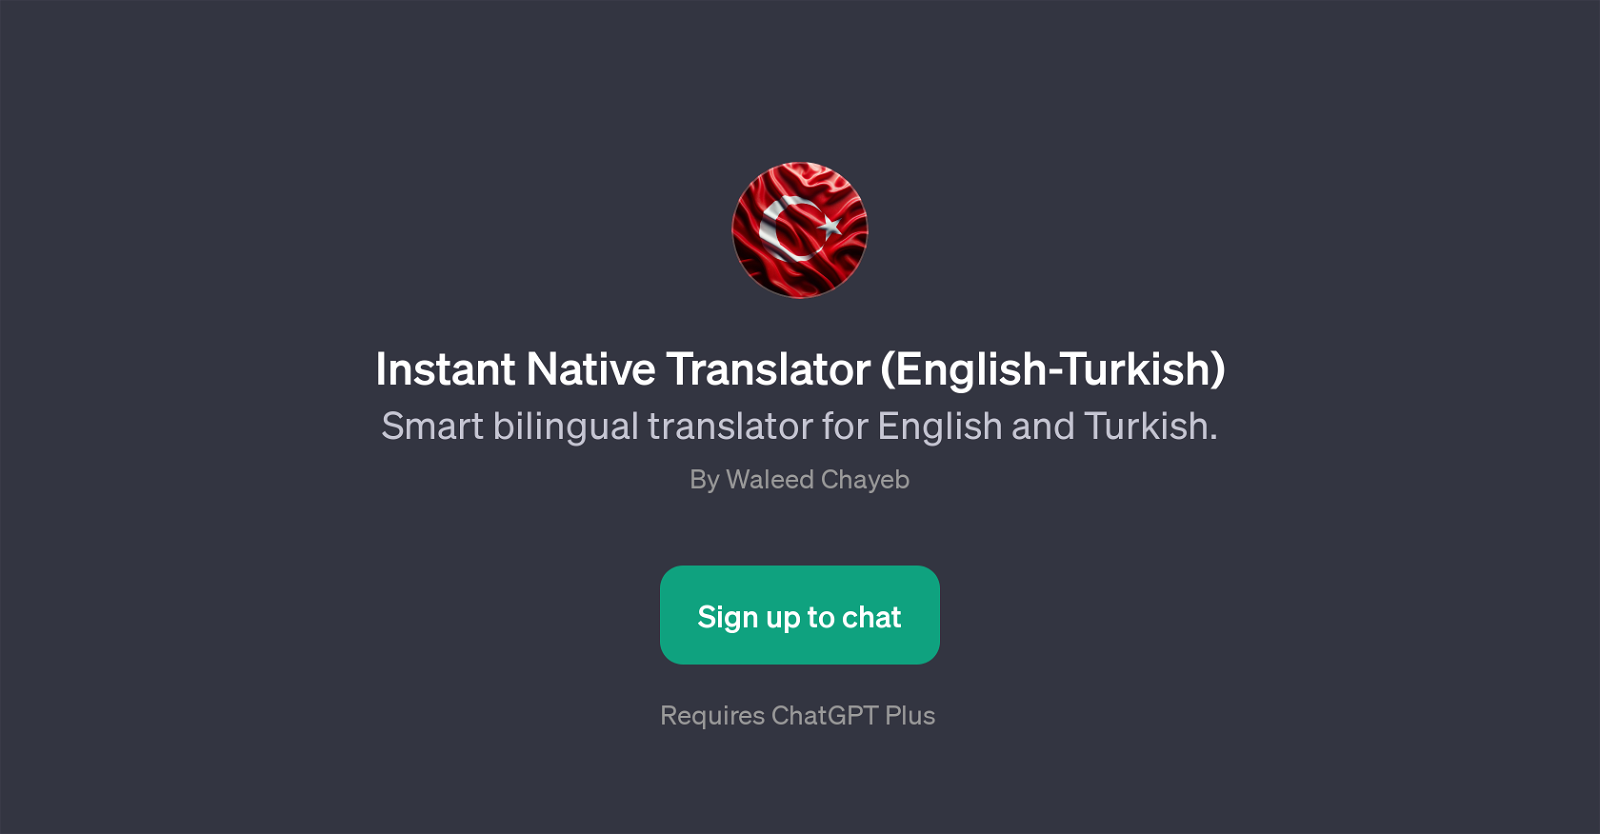 Instant Native Translator (English-Turkish) website